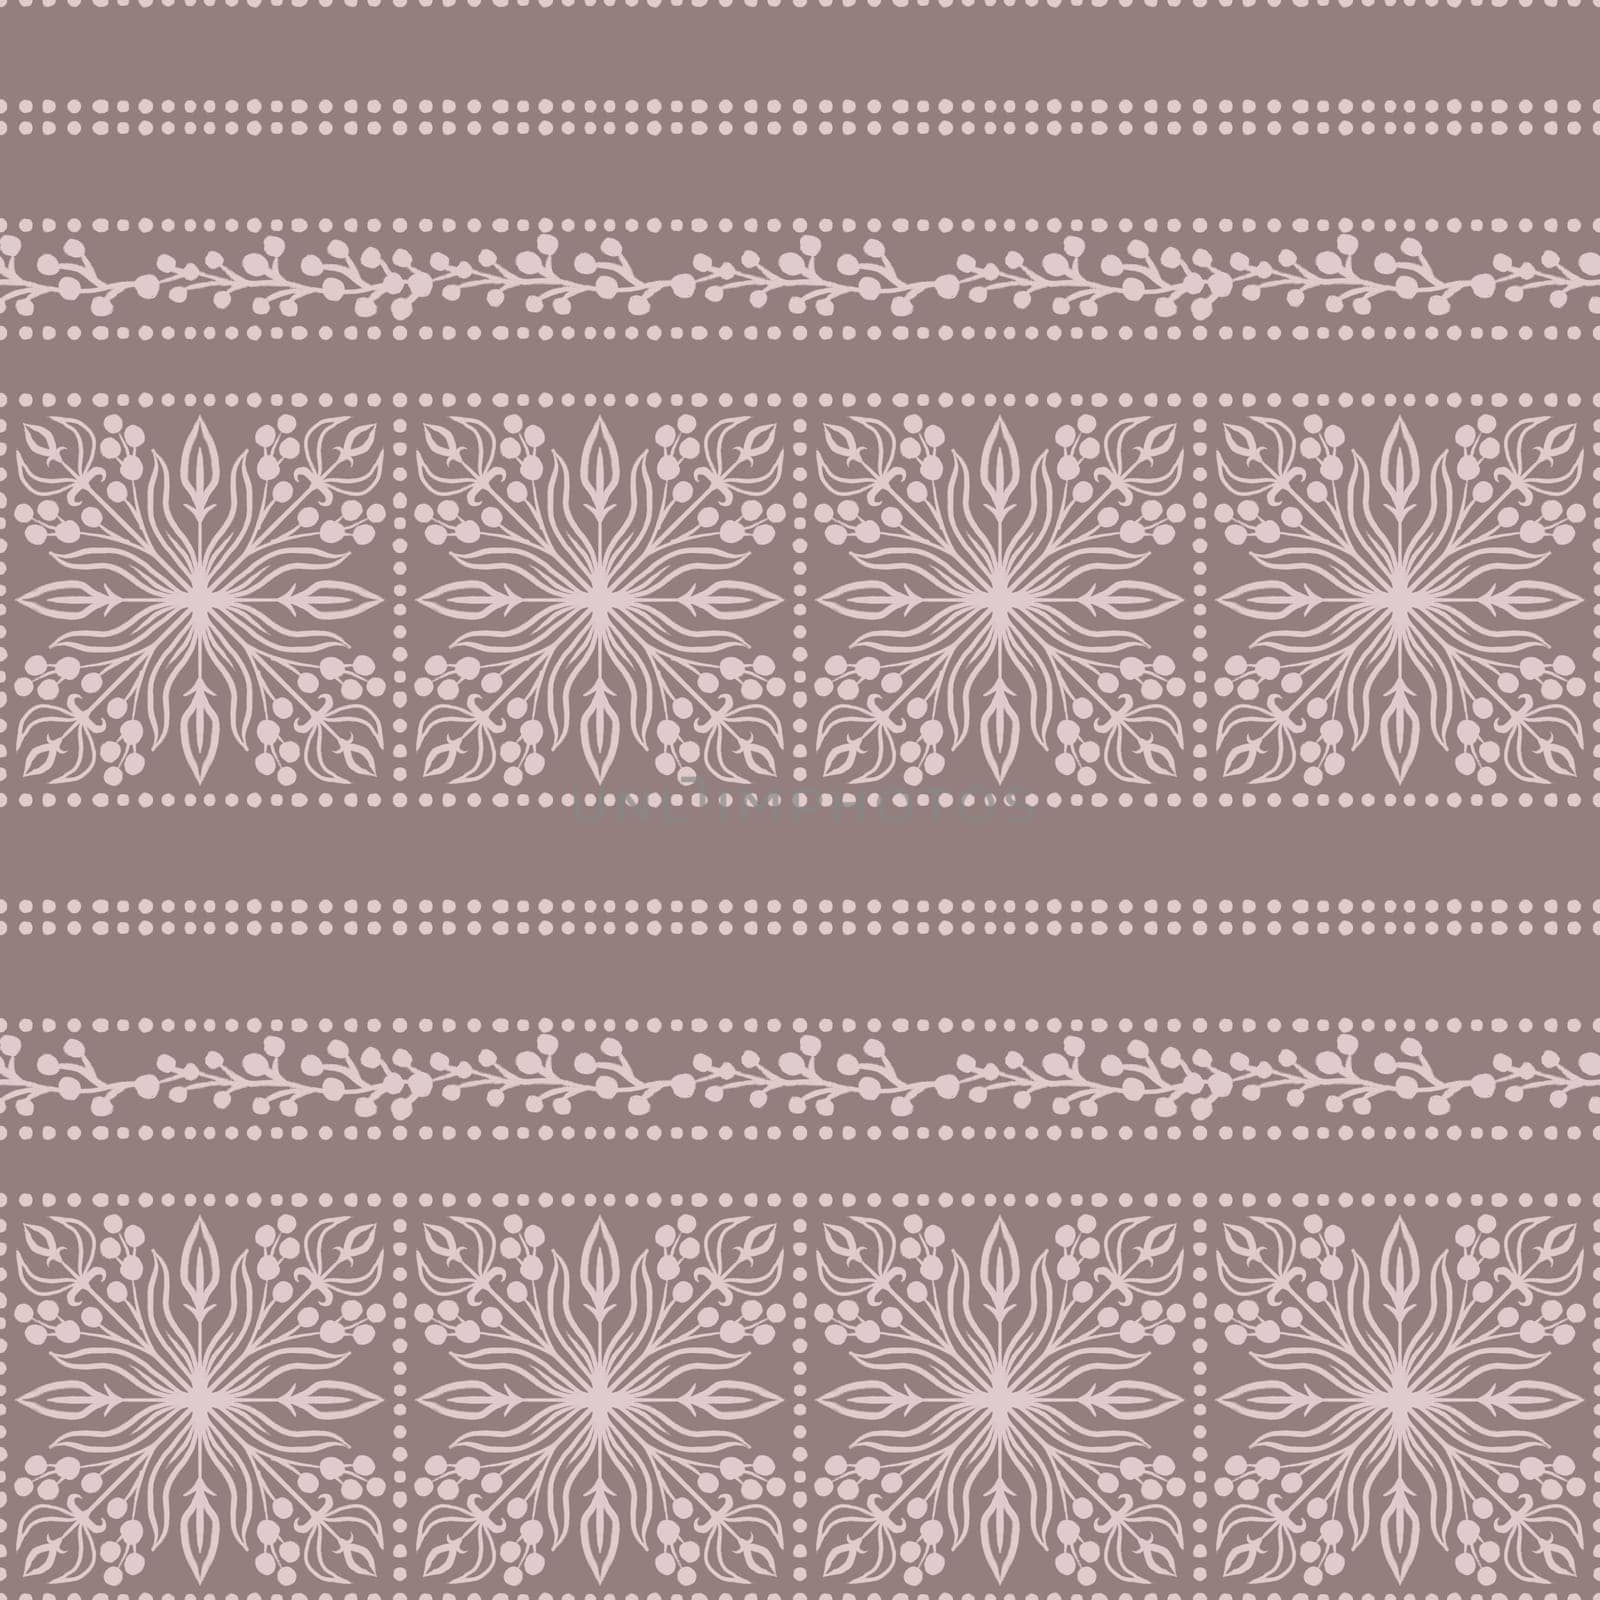 Hand drawn seamless pattern with bandana oriental ethnic elements beige grey background. Elegant pastekl leaves berries, traditional decorative headscarf western ornament